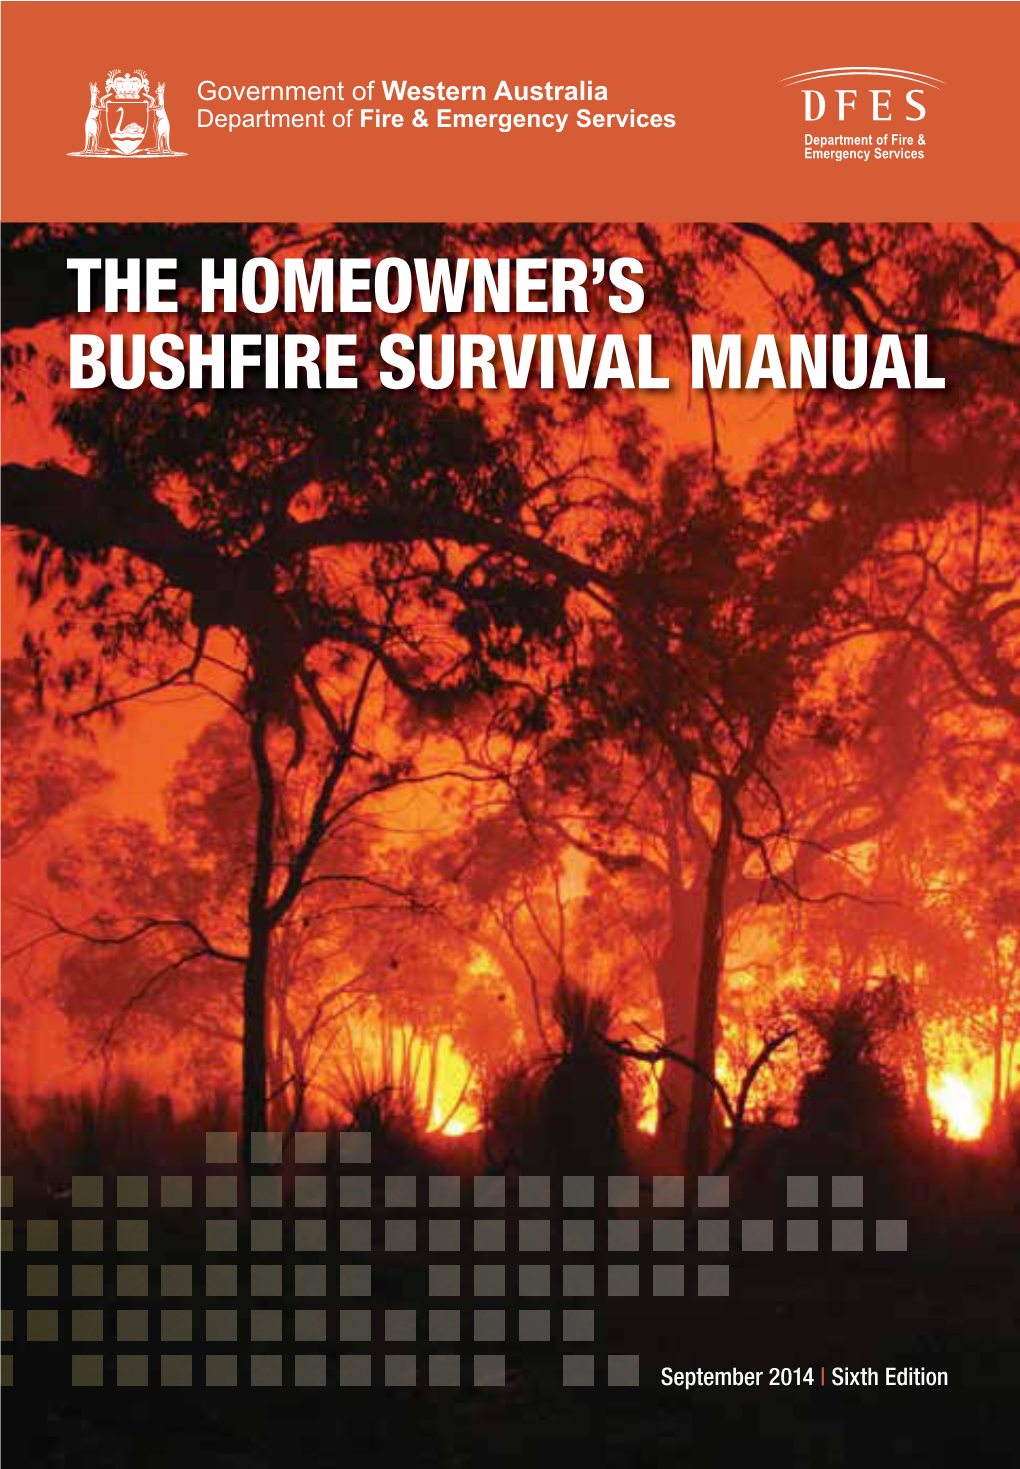 The Homeowner's Bushfire Survival Manual